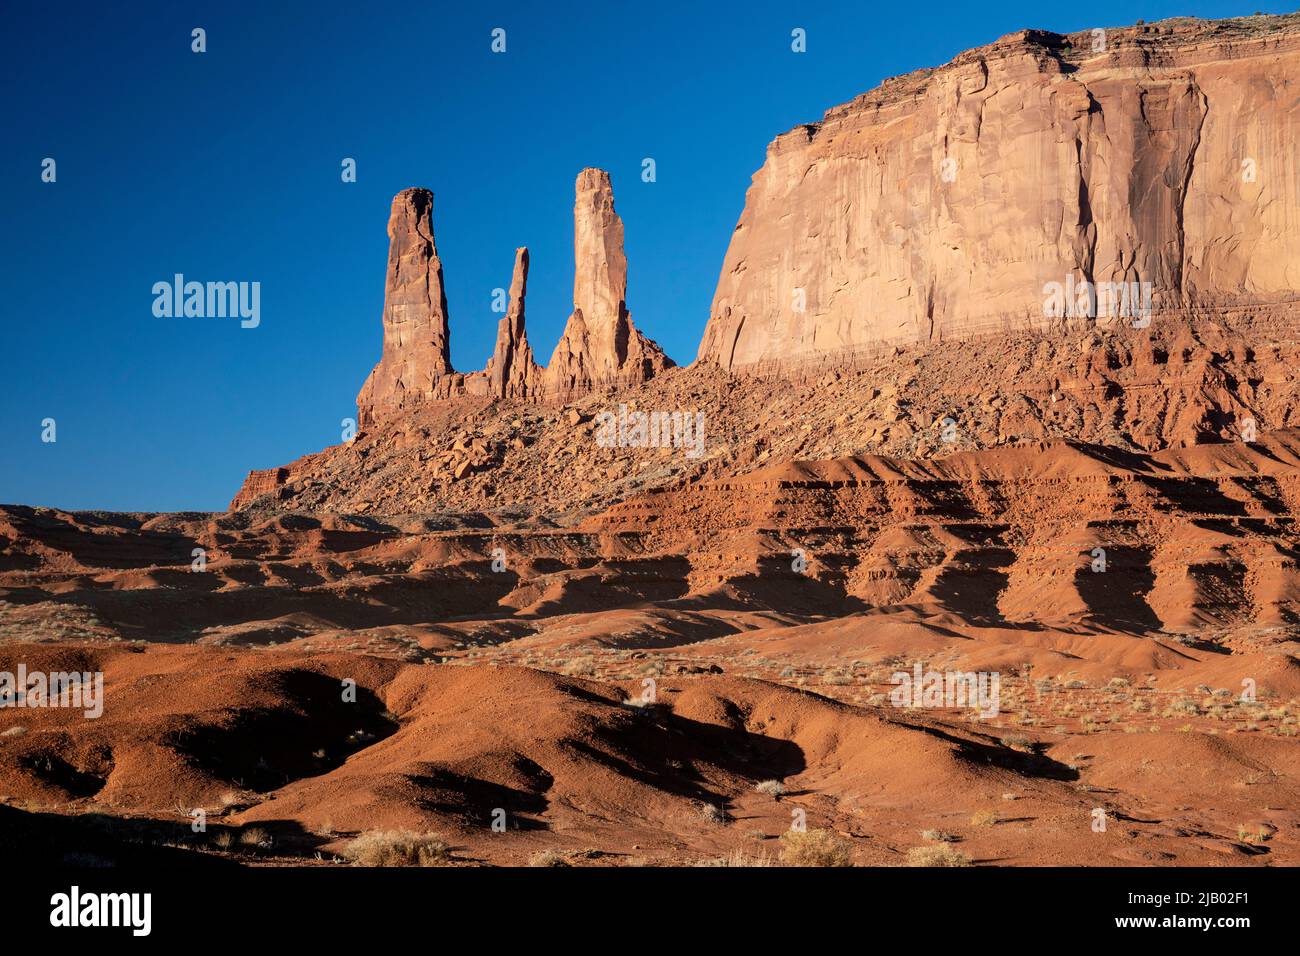 AZ00423-00...ARIZONA - sandstone buttes llamó a las Tres Hermanas en John Ford's Point en Monument Valley Navajo Tribal Park. Foto de stock